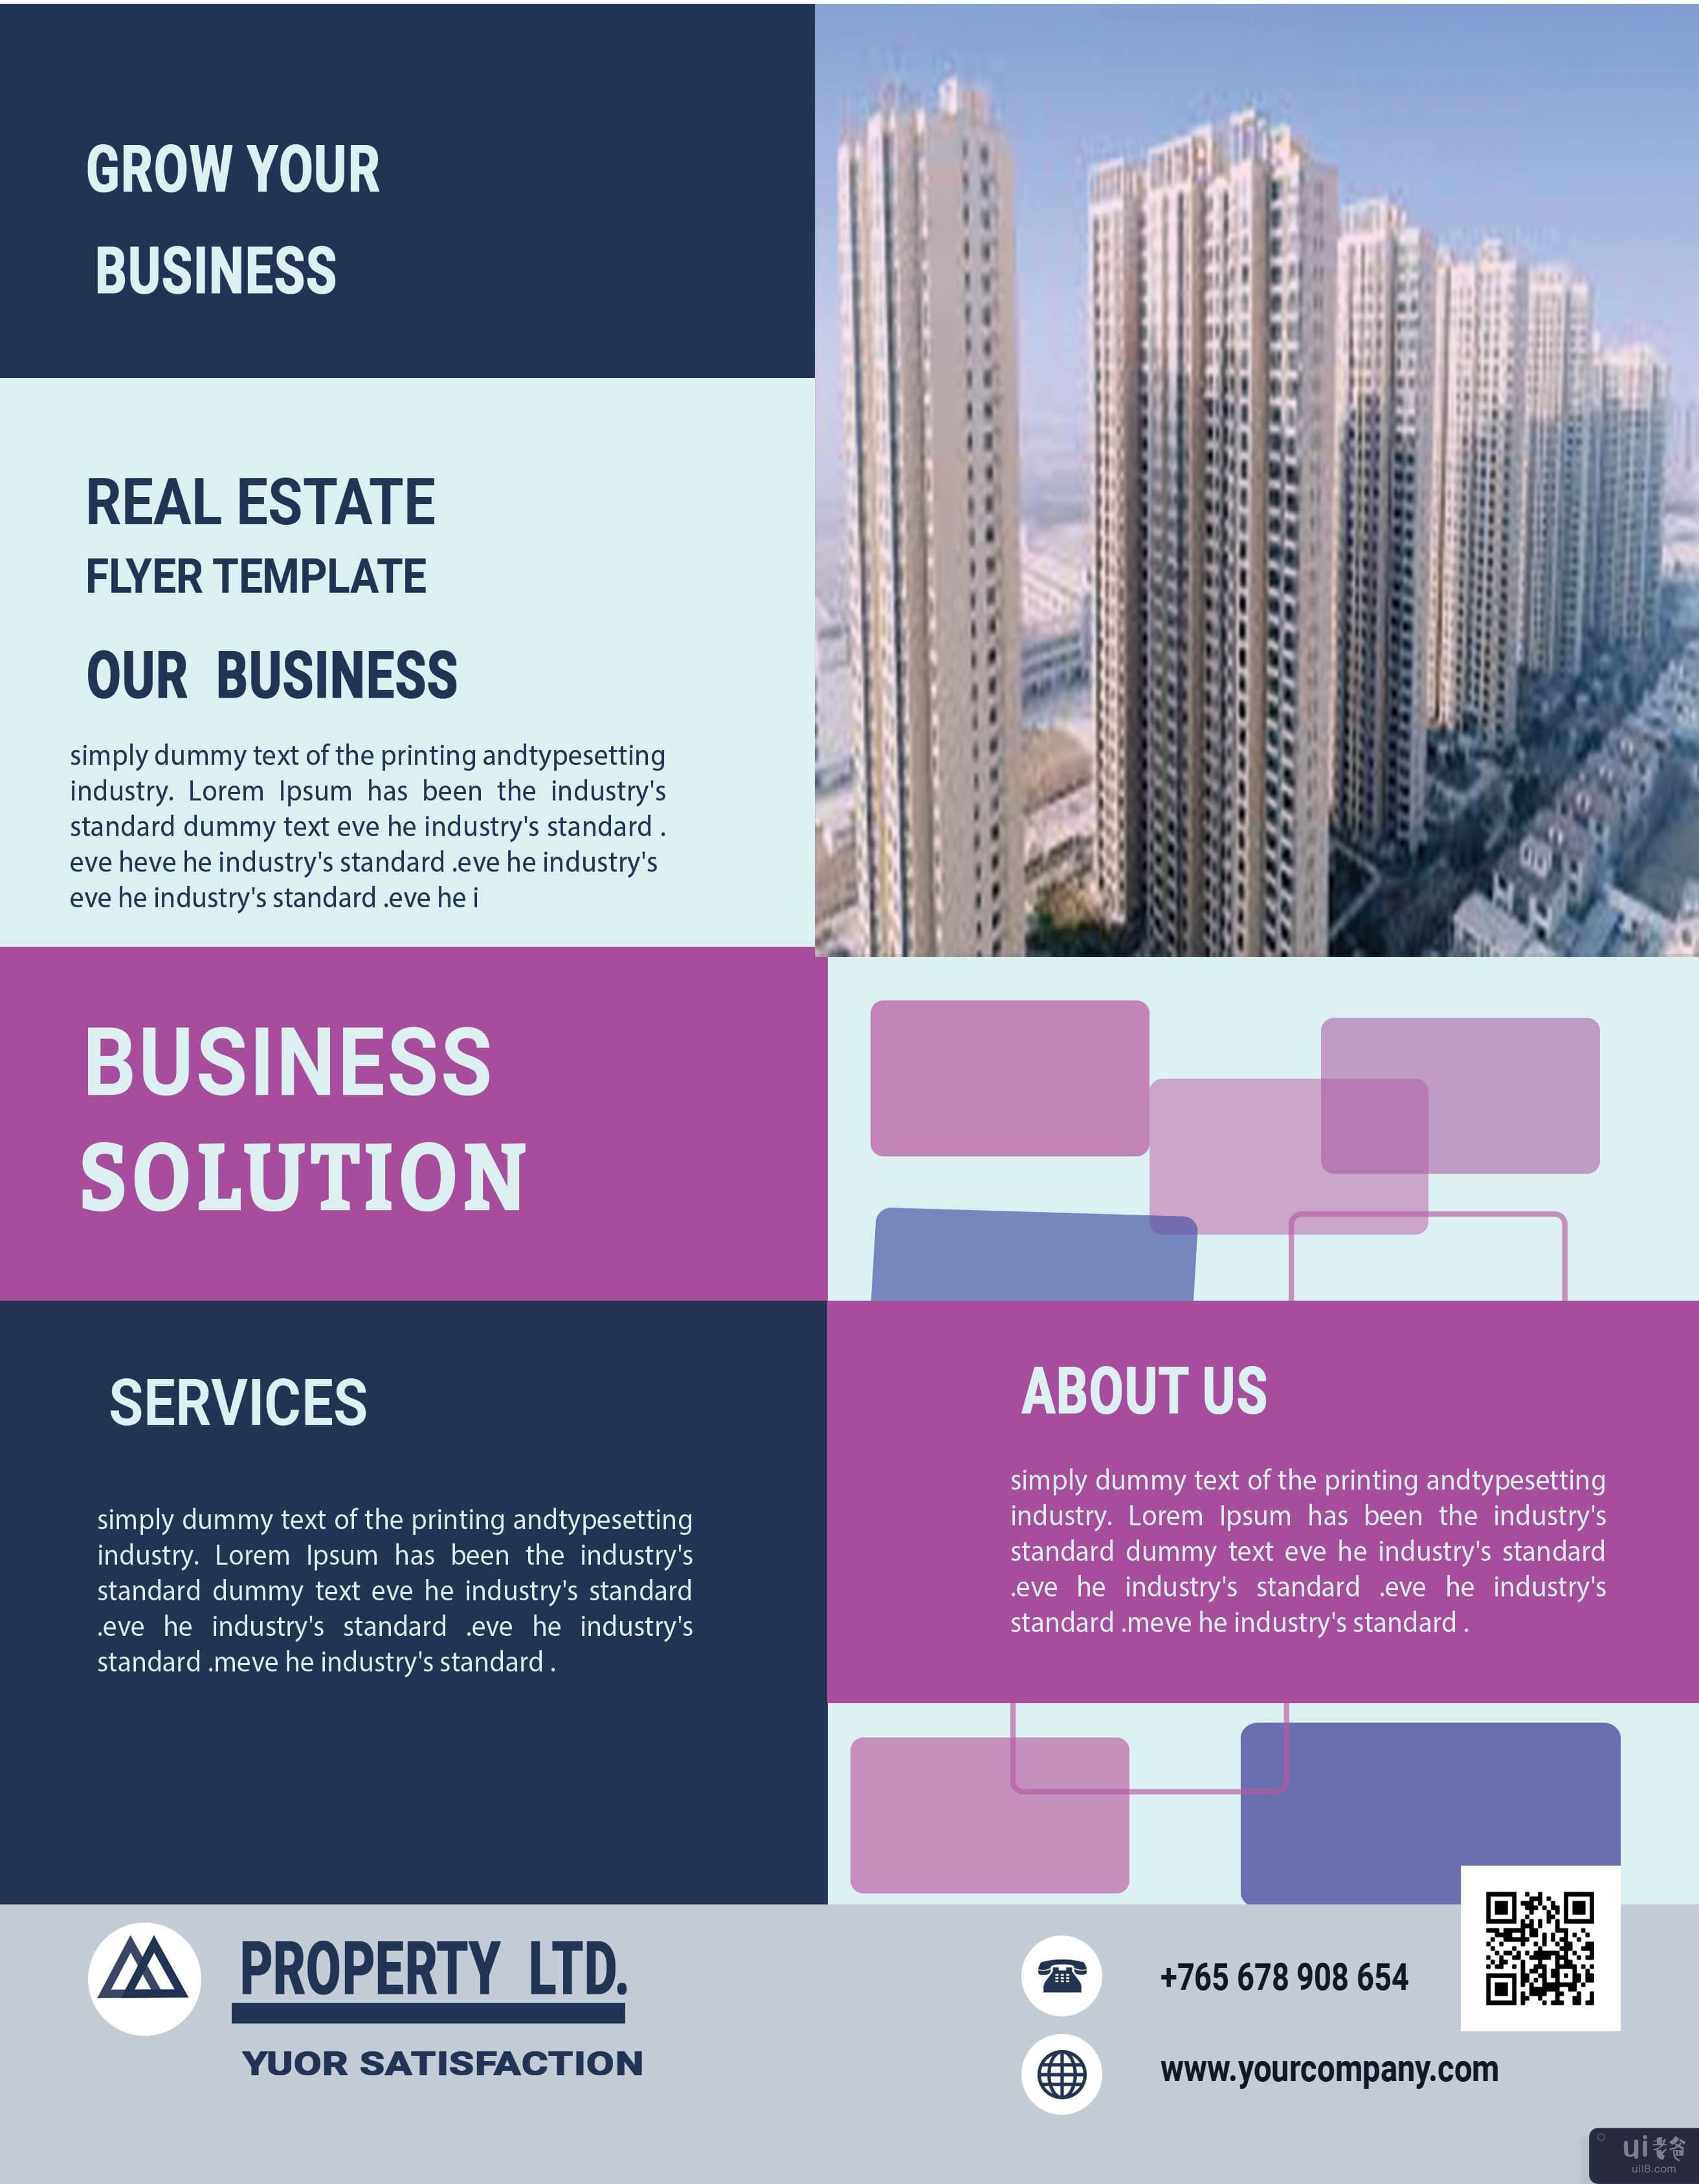 企业房地产传单模板(Corporate Real Estate Flyer Template)插图